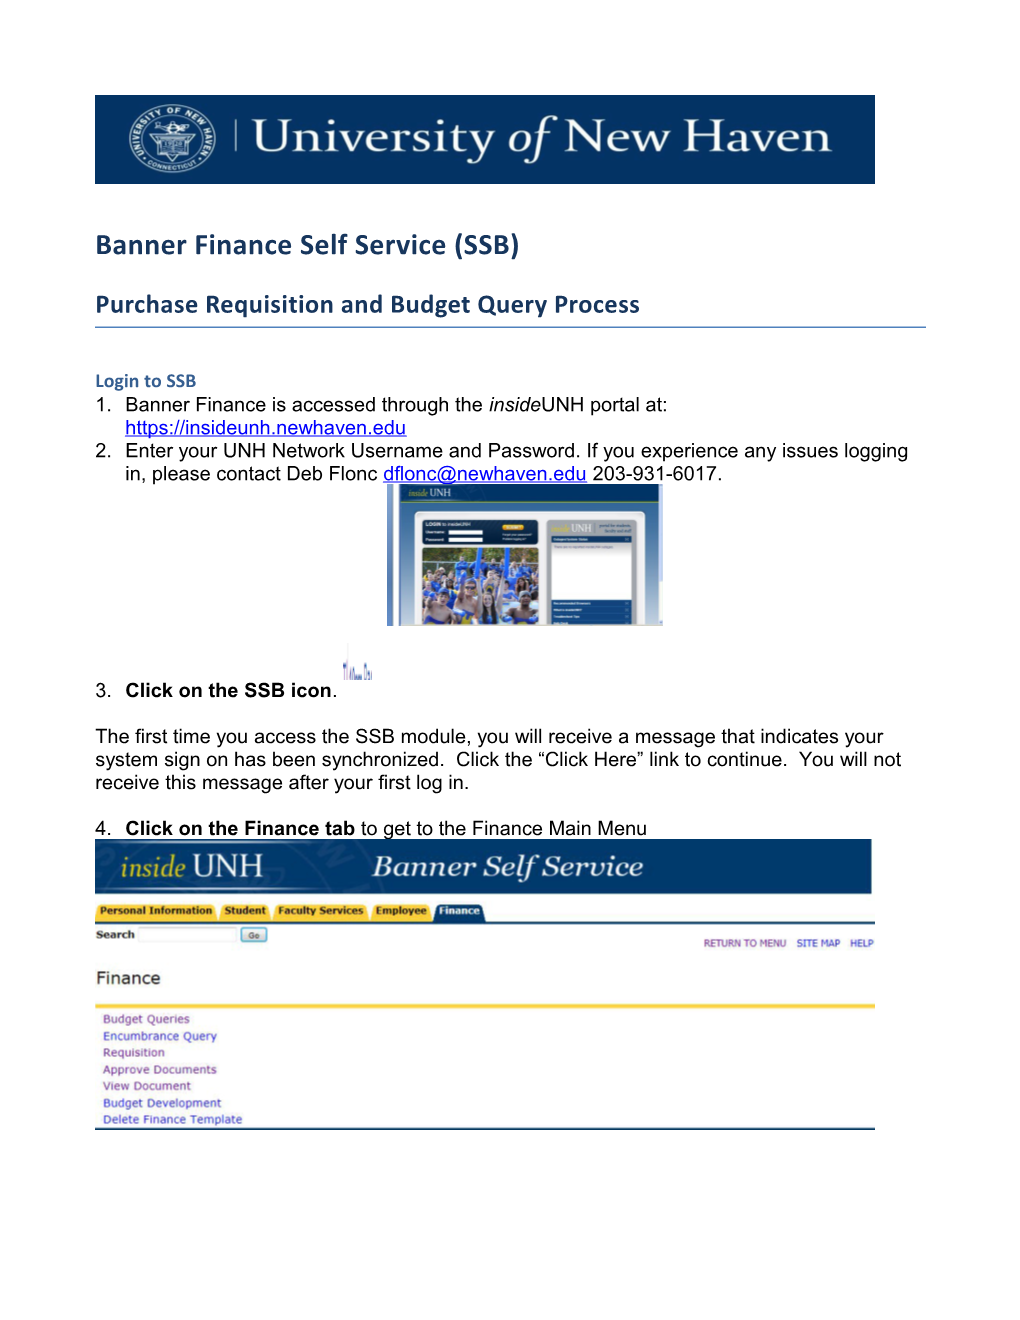 Bannerfinance Self Service (SSB)